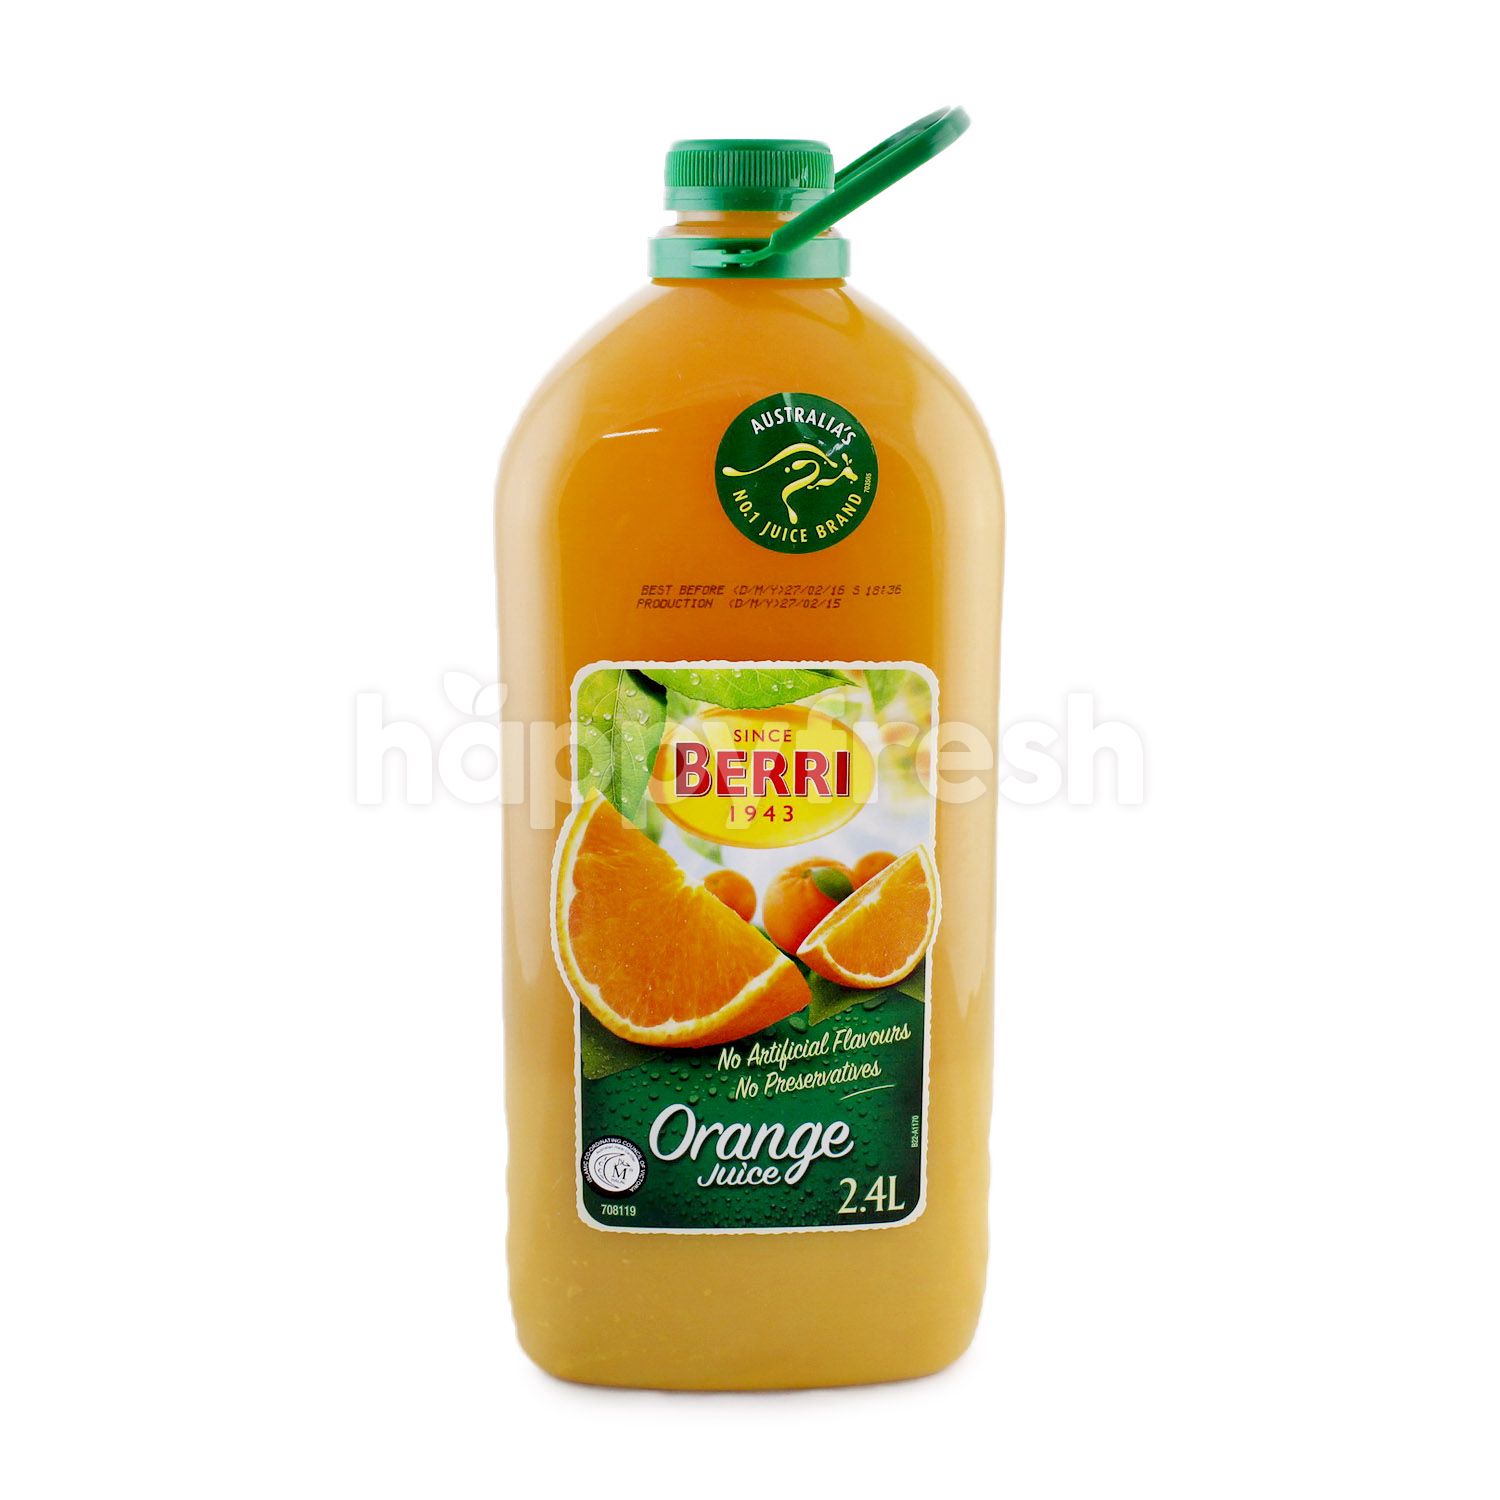 Beli Berri No Artificial Flavors And Preservatives Orange Juice Dari Mercato Happyfresh Happyfresh